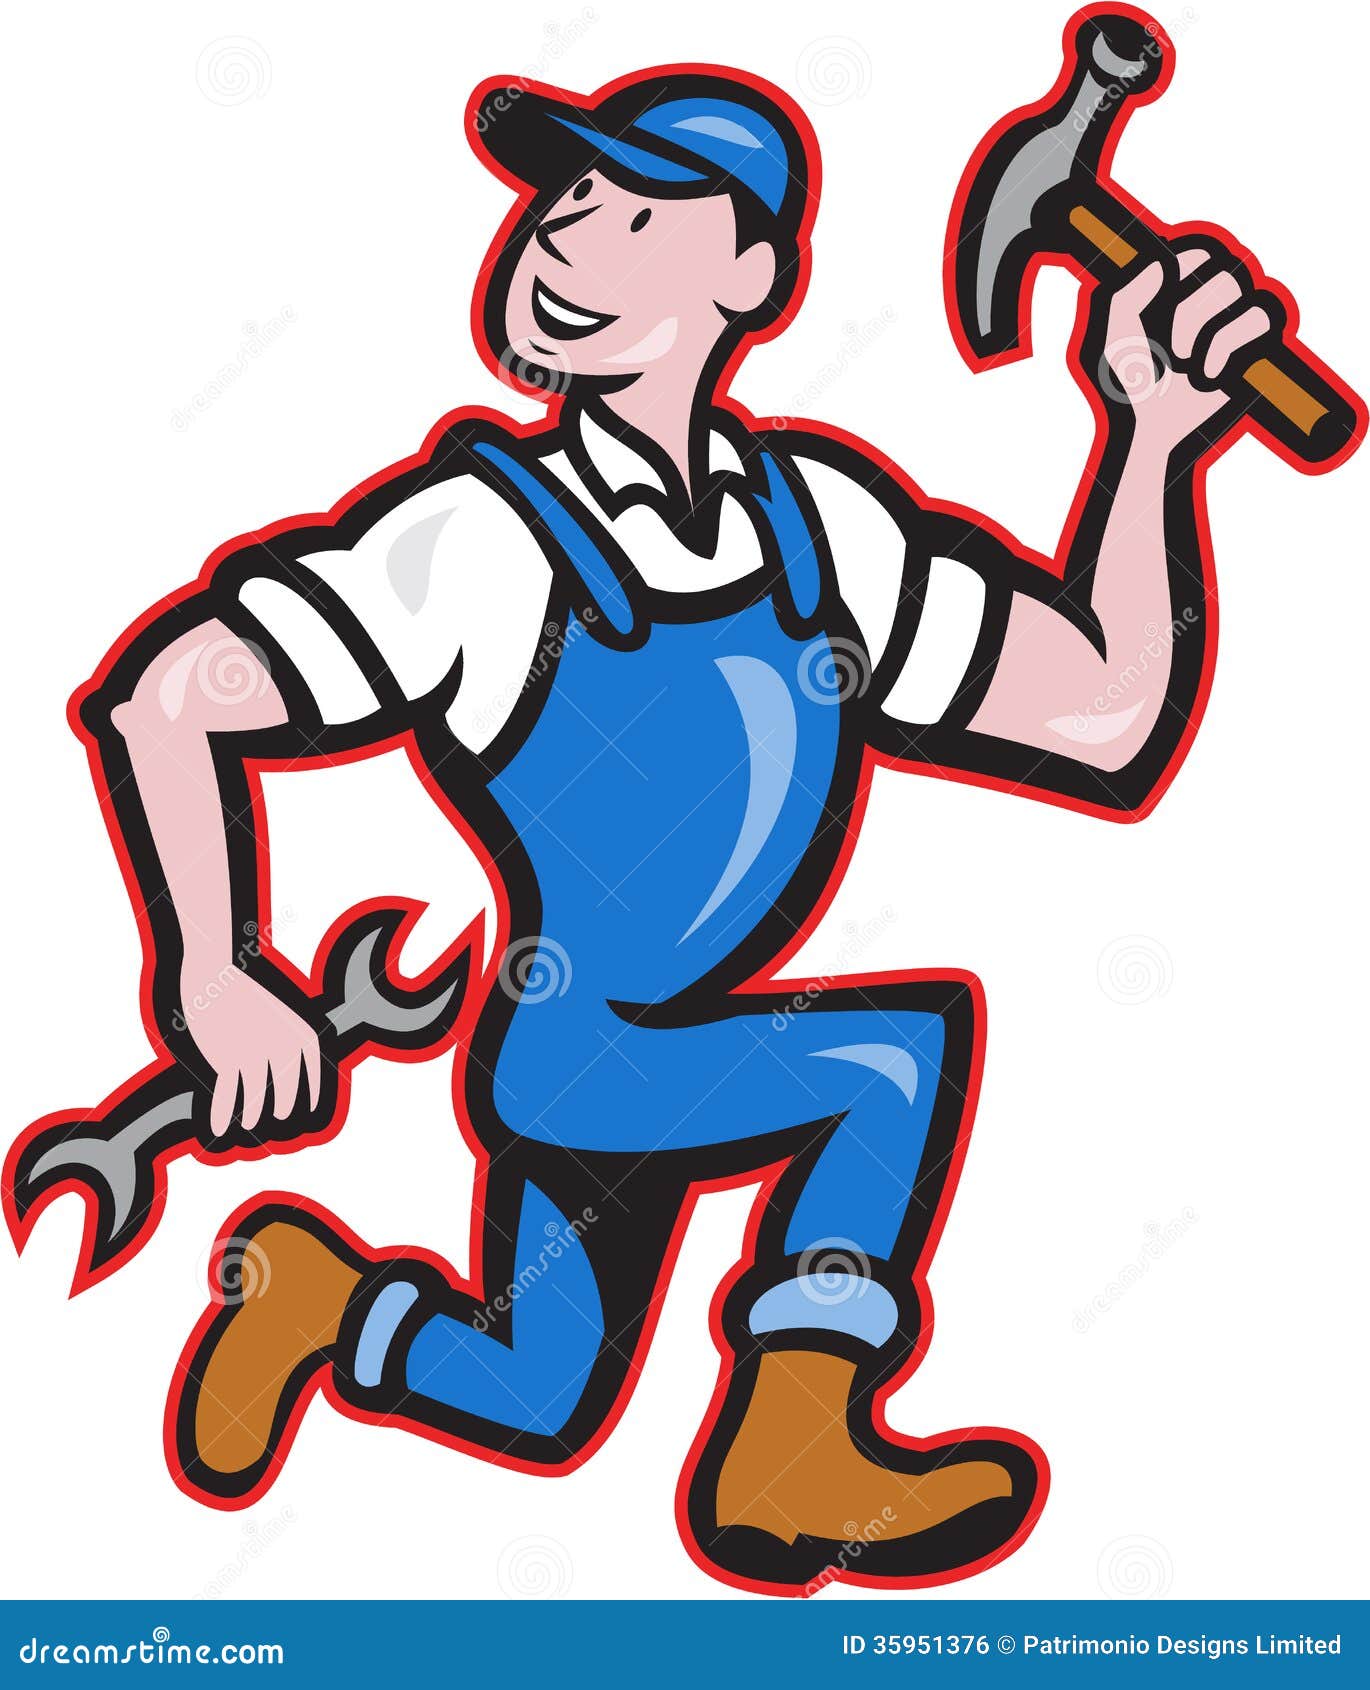 carpenter-builder-hammer-running-cartoon-illustration-construction-worker-one-hand-spanner-wrench-other-35951376.jpg